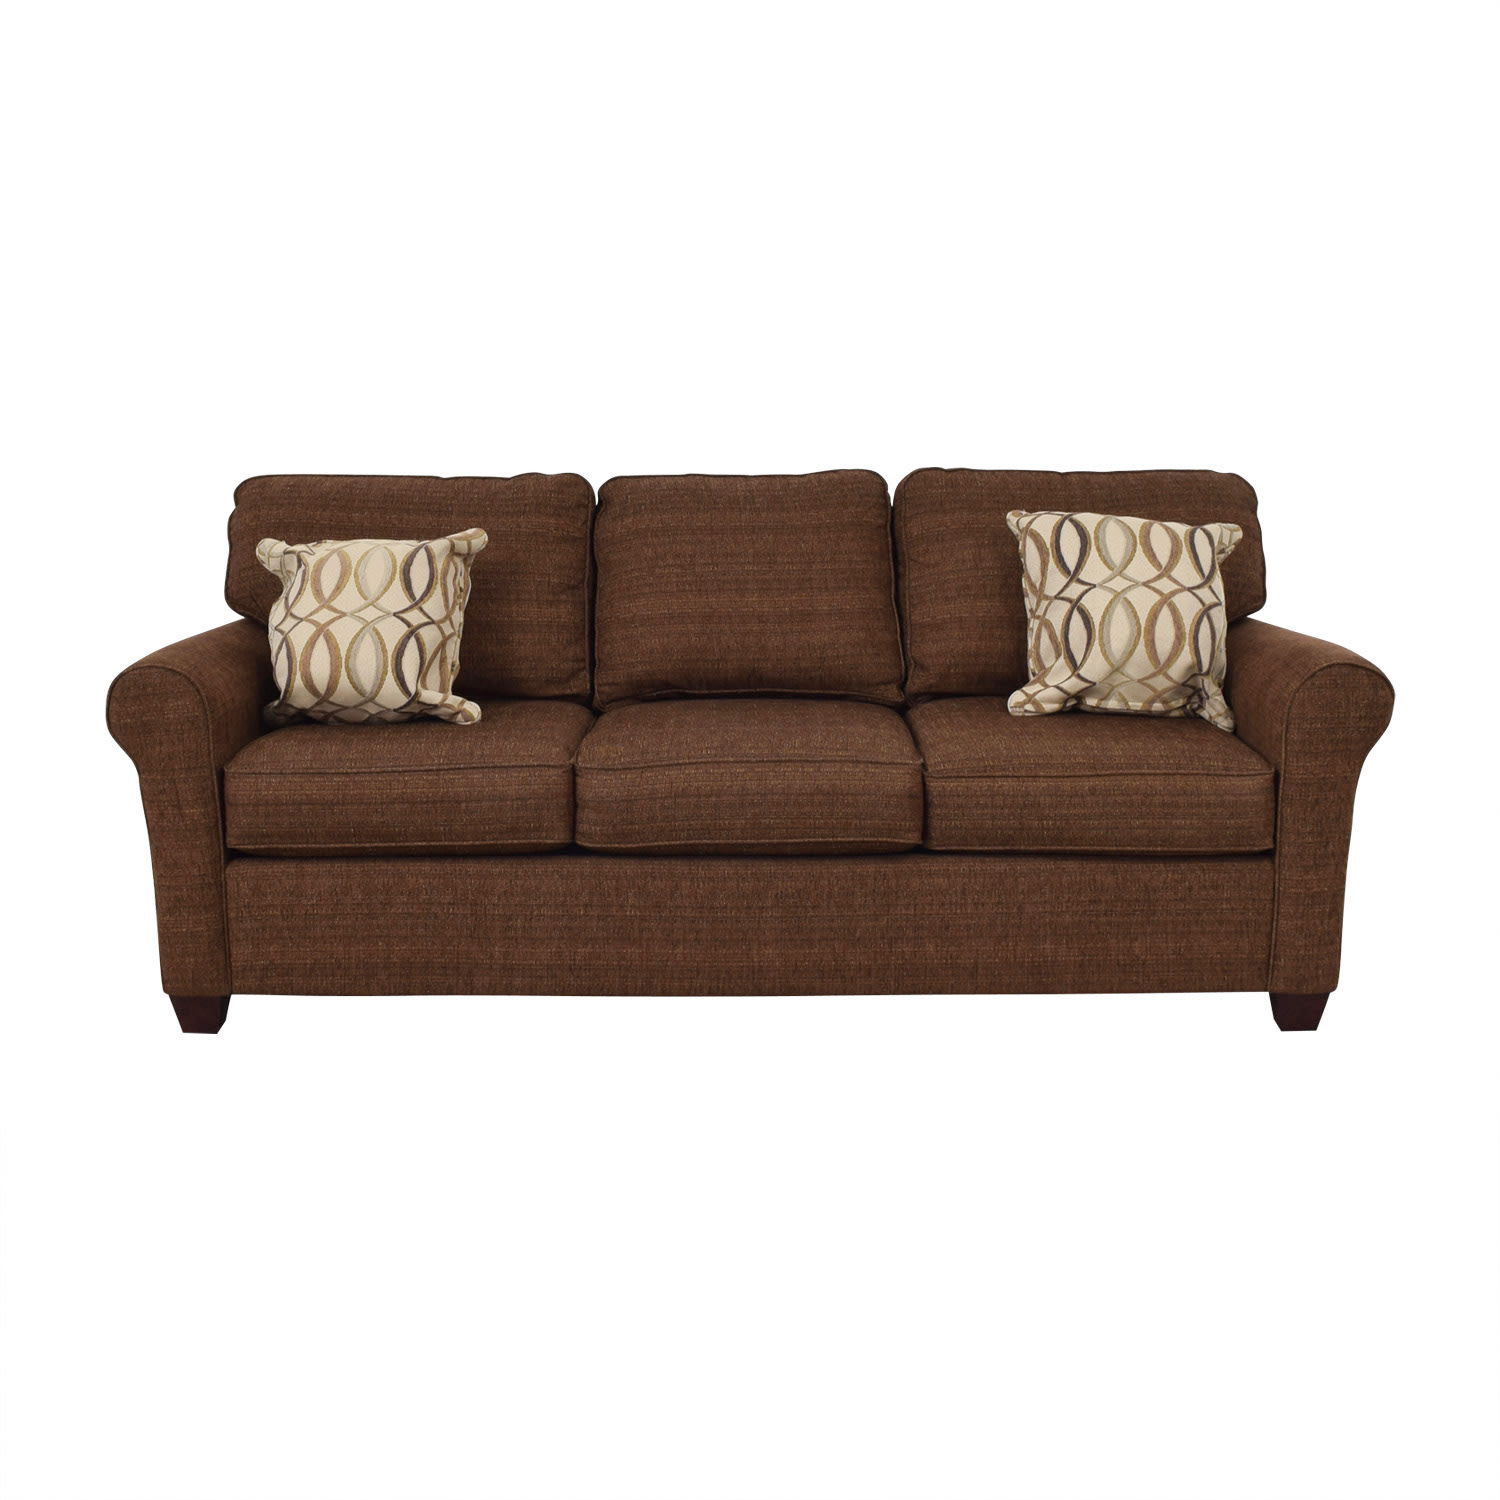 Bassett Bassett Brown Tweed Three-Cushion Sofa second hand